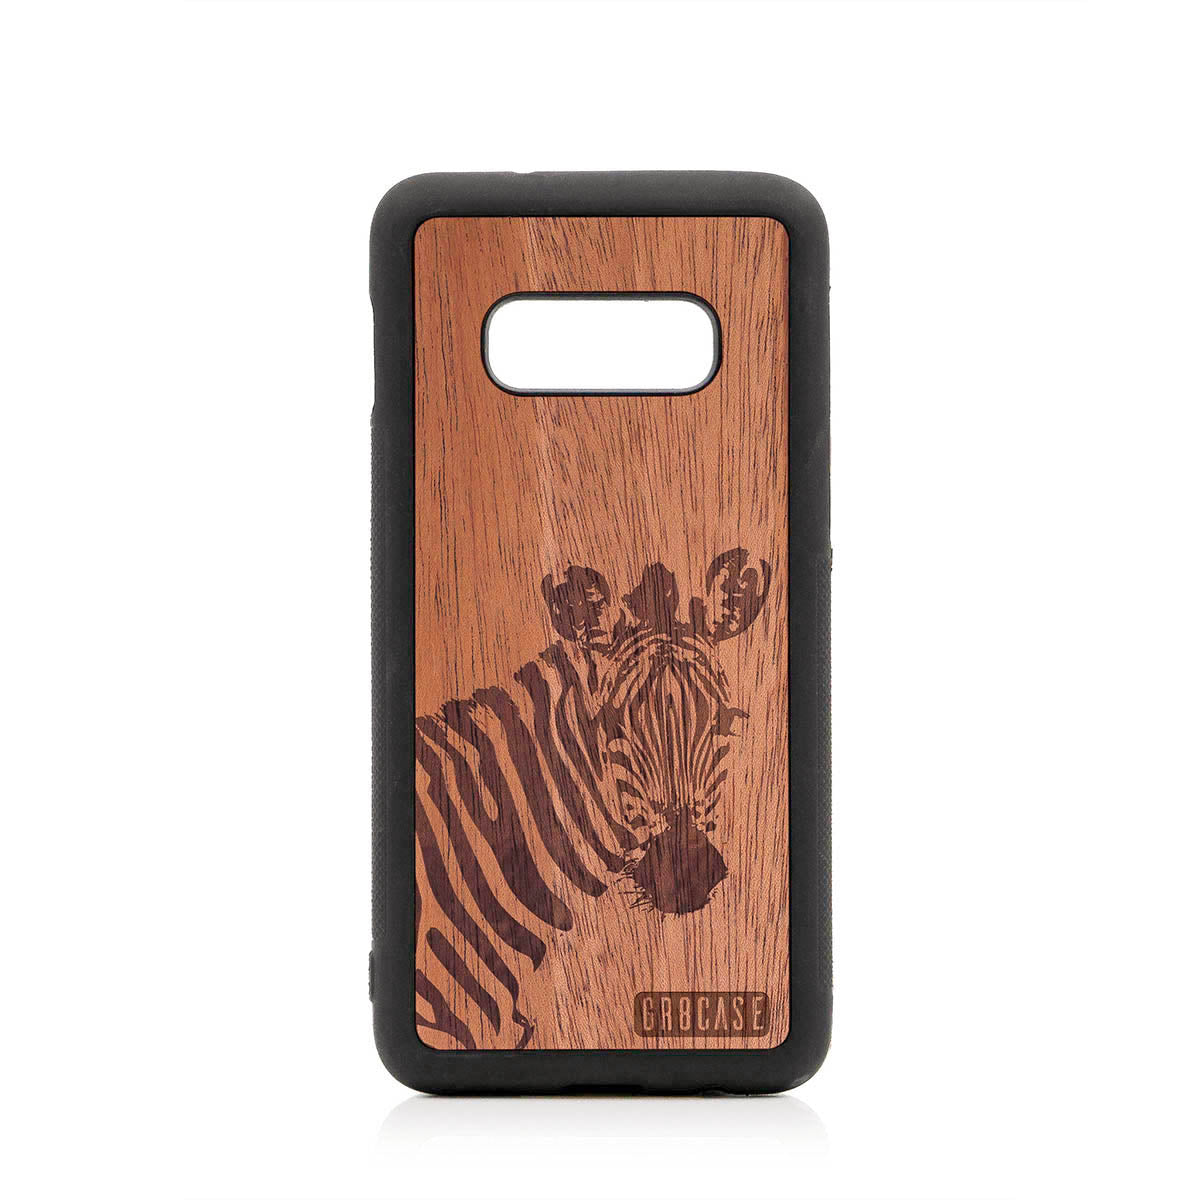 Lookout Zebra Design Wood Case For Samsung Galaxy S10E